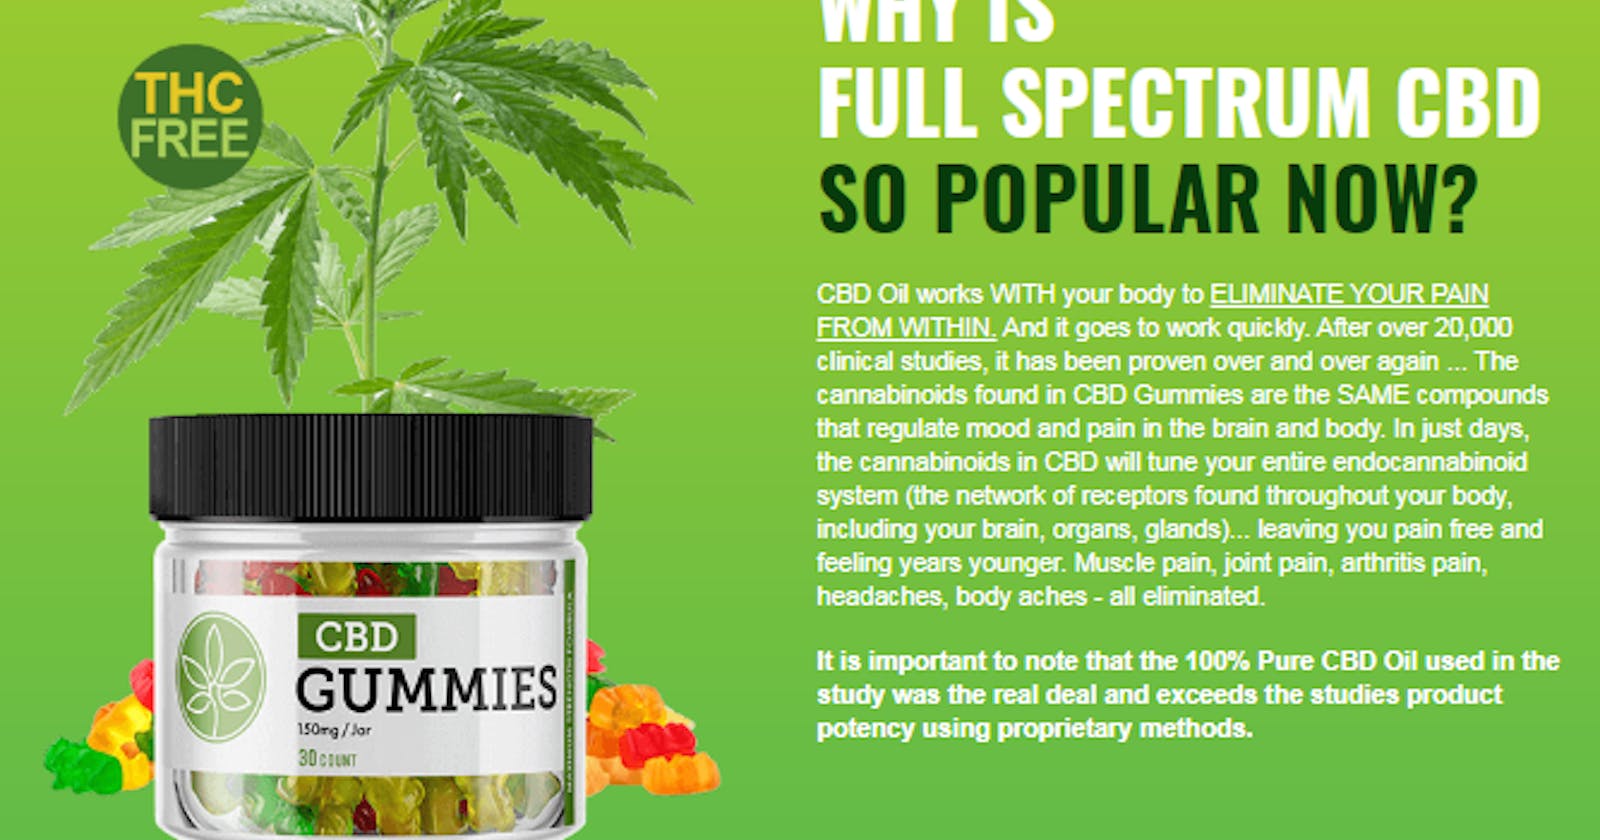 Jorge Ramos CBD Gummies Reviews – Ingredients, Side Effects & Complaints?